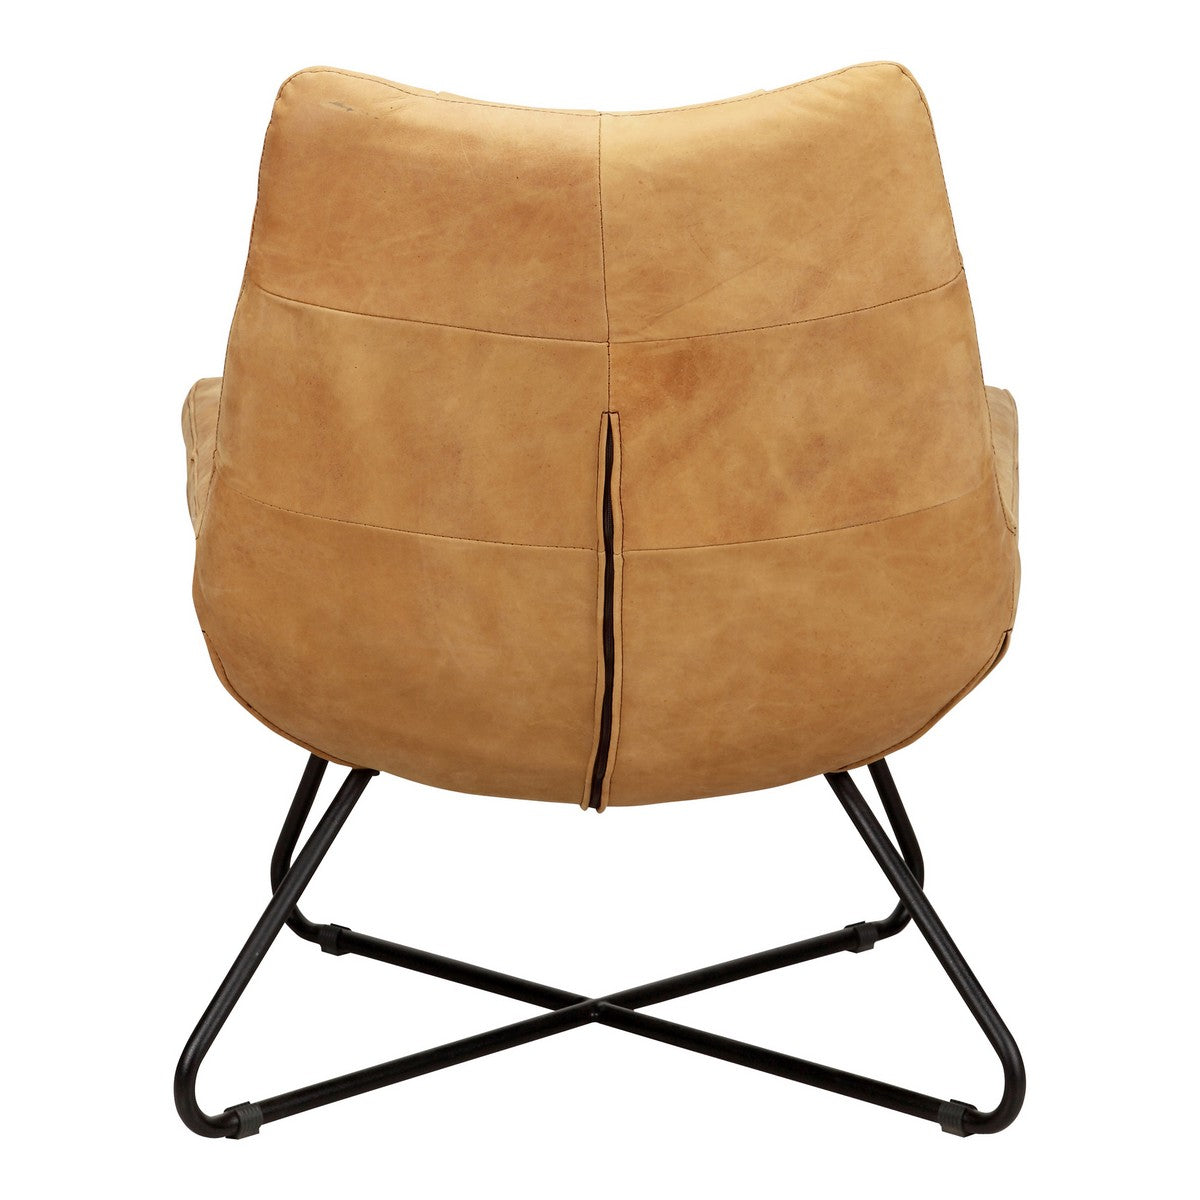 Moe's Home Collection Graduate Lounge Chair Tan - PK-1063-40